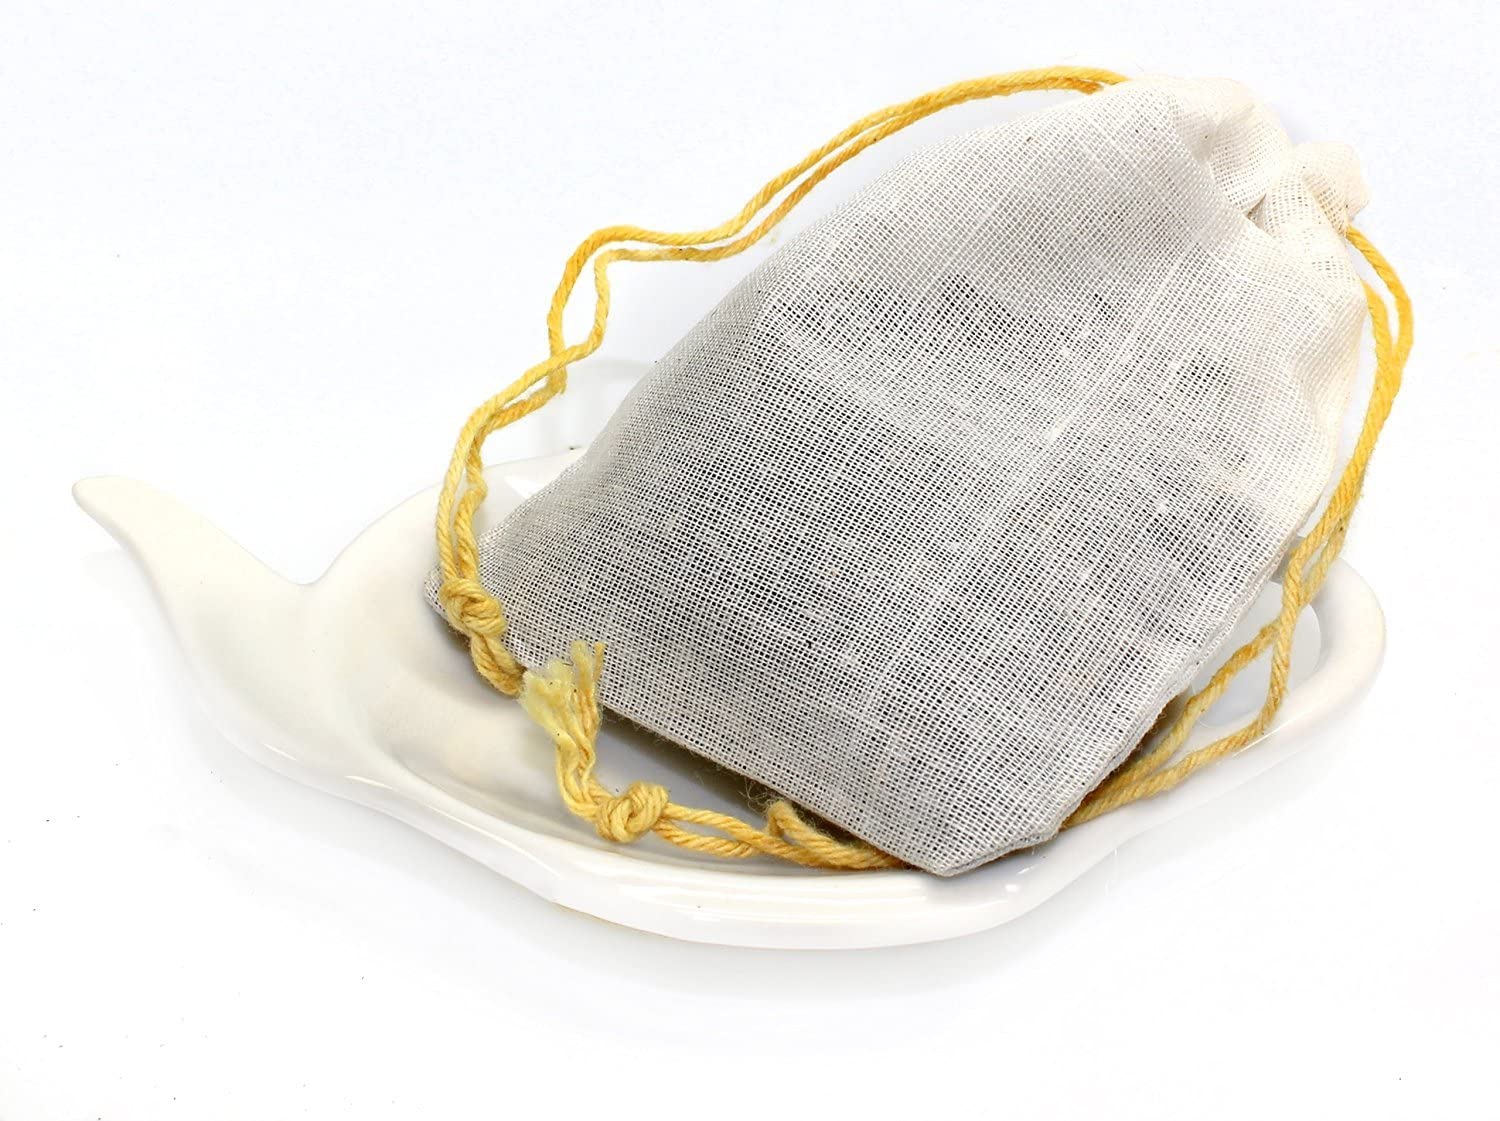 White Ceramic Tea Bag Coasters Spoon Rests - sh1181cb0TEA